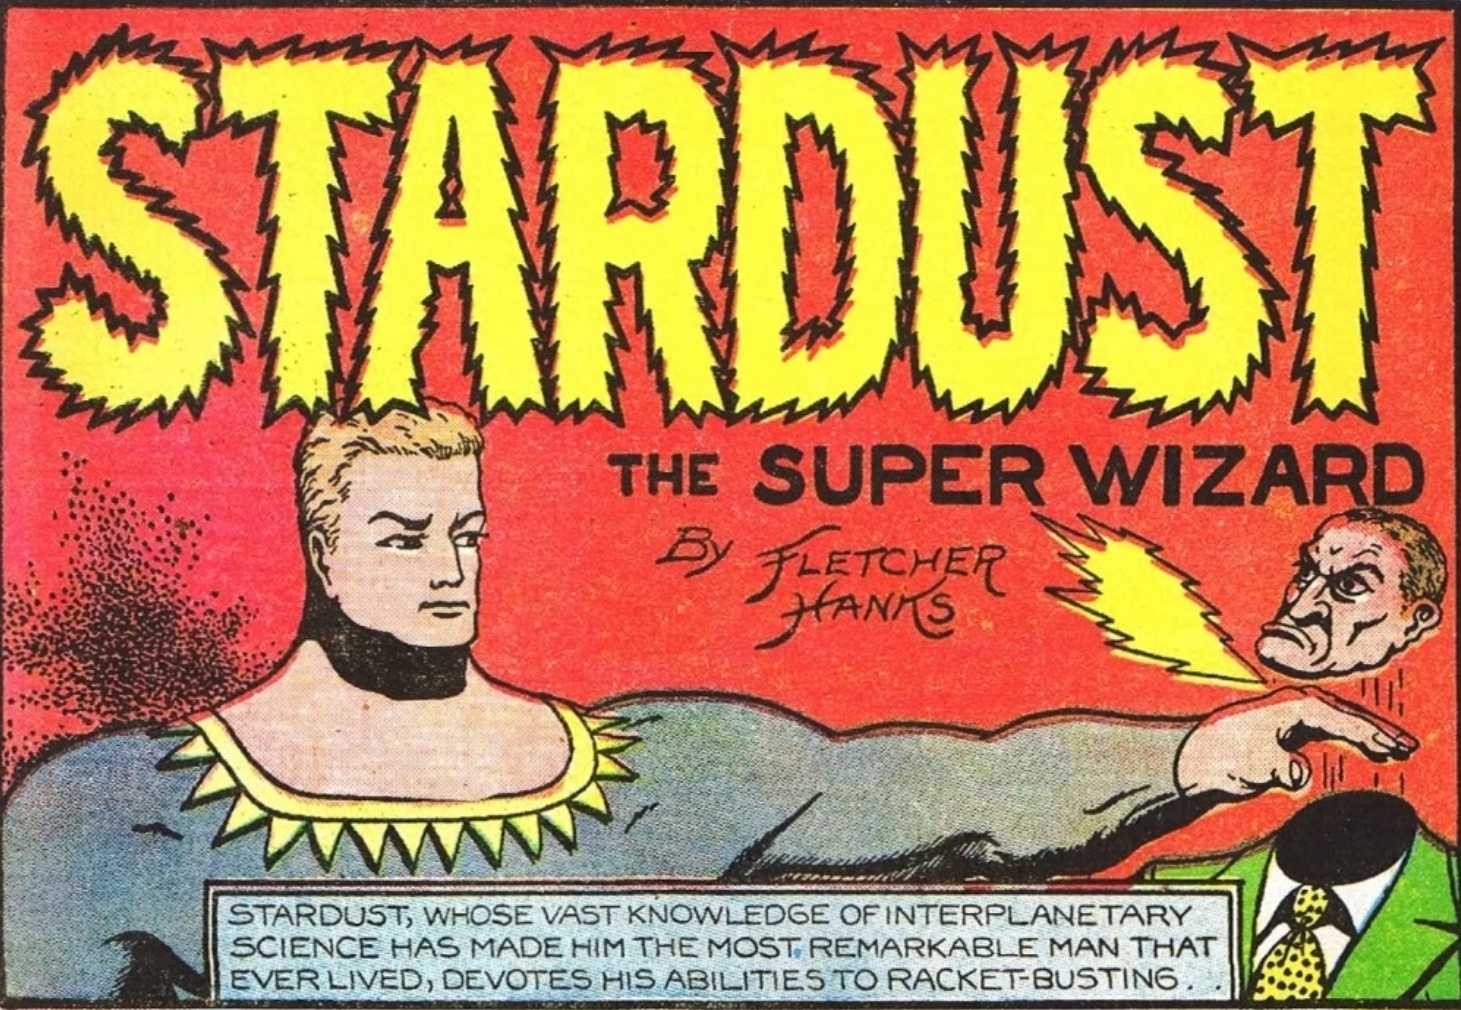 Prepare for the "bat$#!%" return of 'Stardust the Super Wizard'